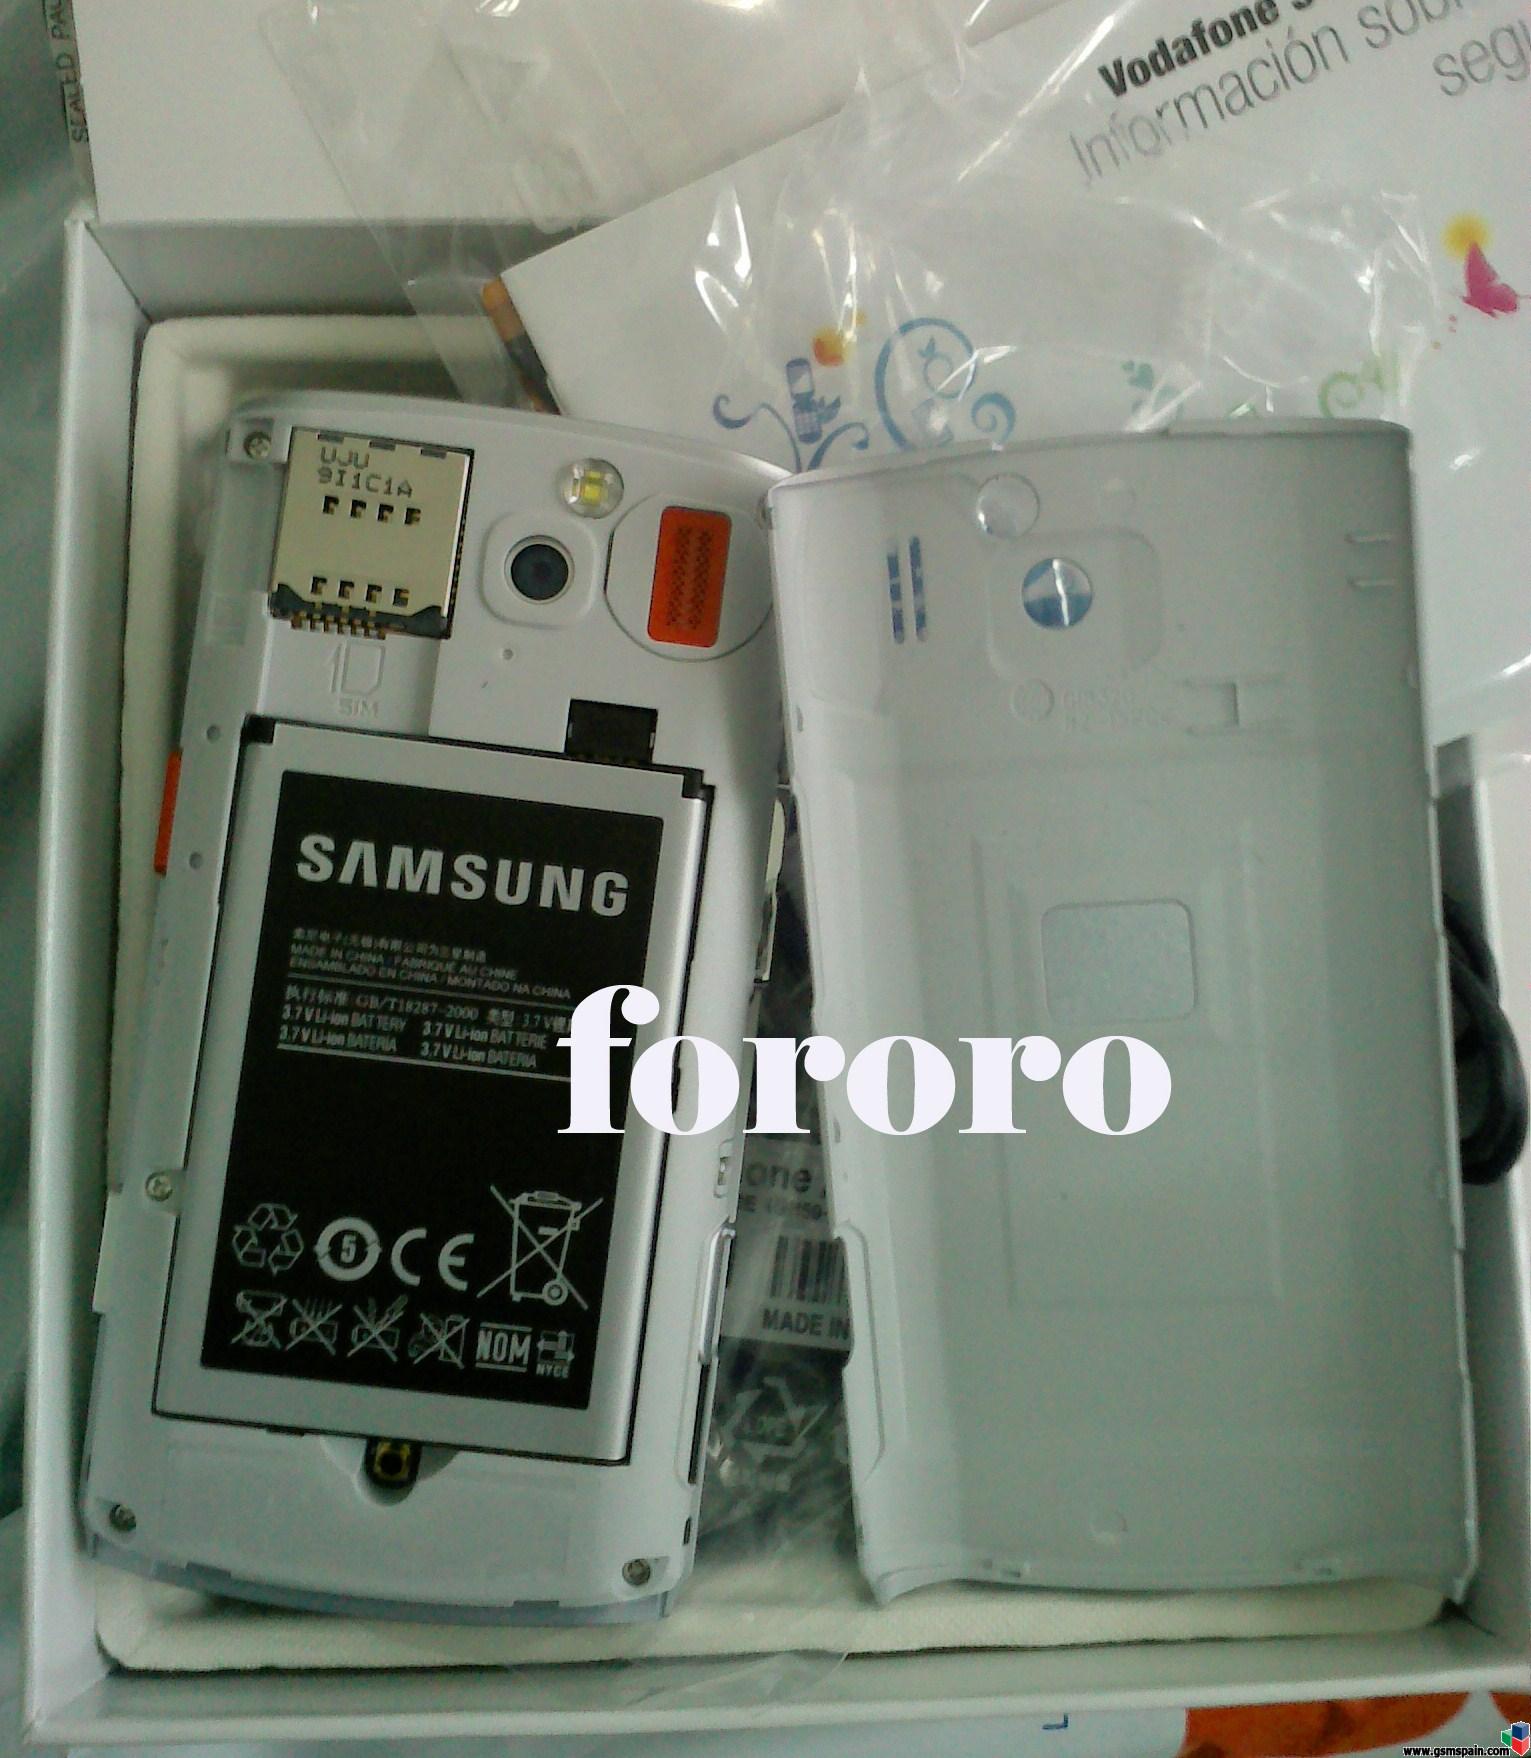 Samsung GTI8320 / Vodafone 360 H1 (Para mi hamijo Cocky)